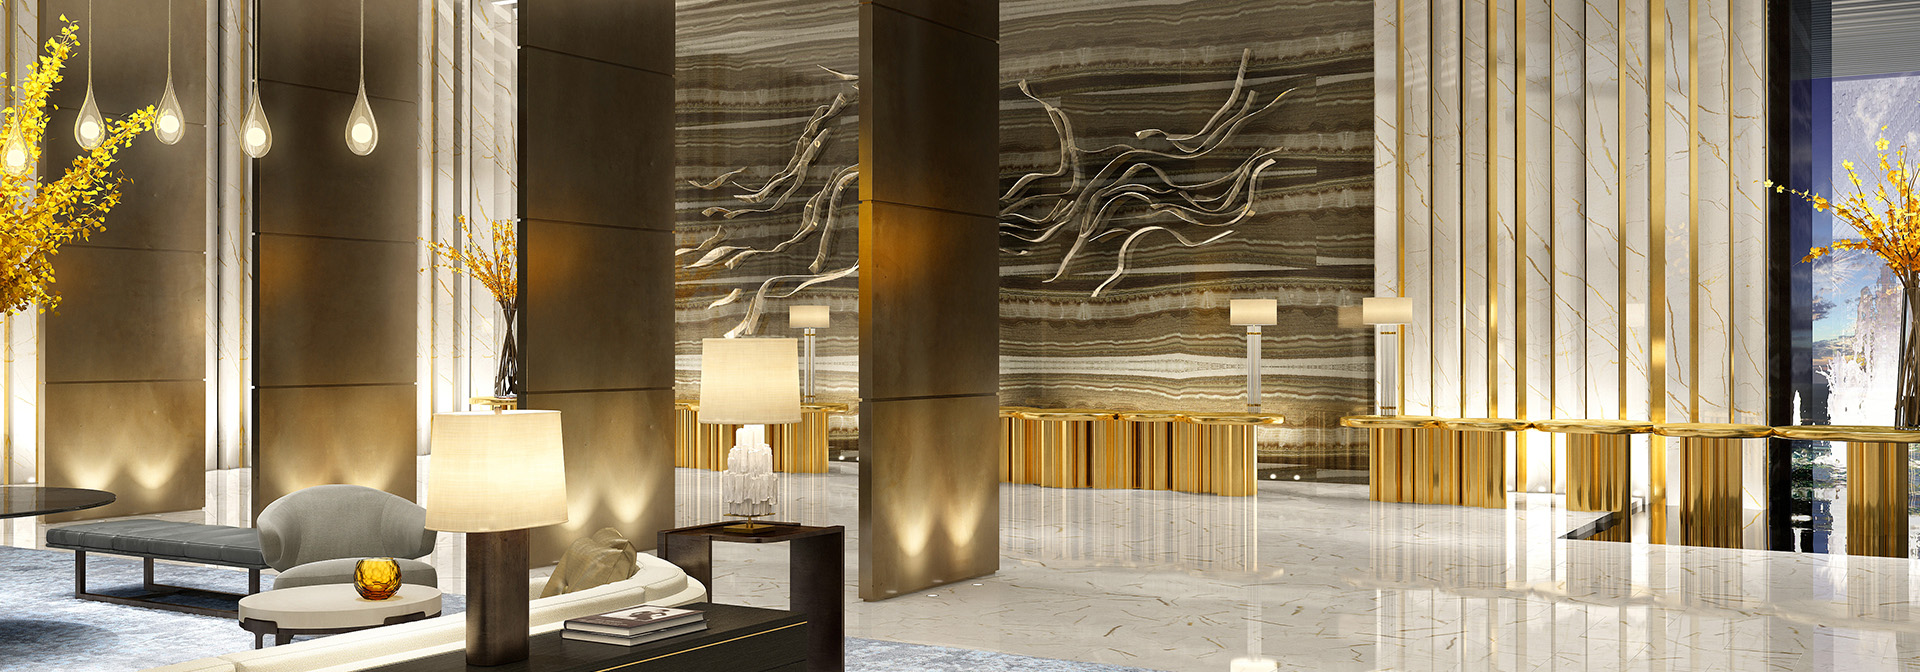 Ga Group - Luxury Hotel And Residential Interior Design | Brand Design